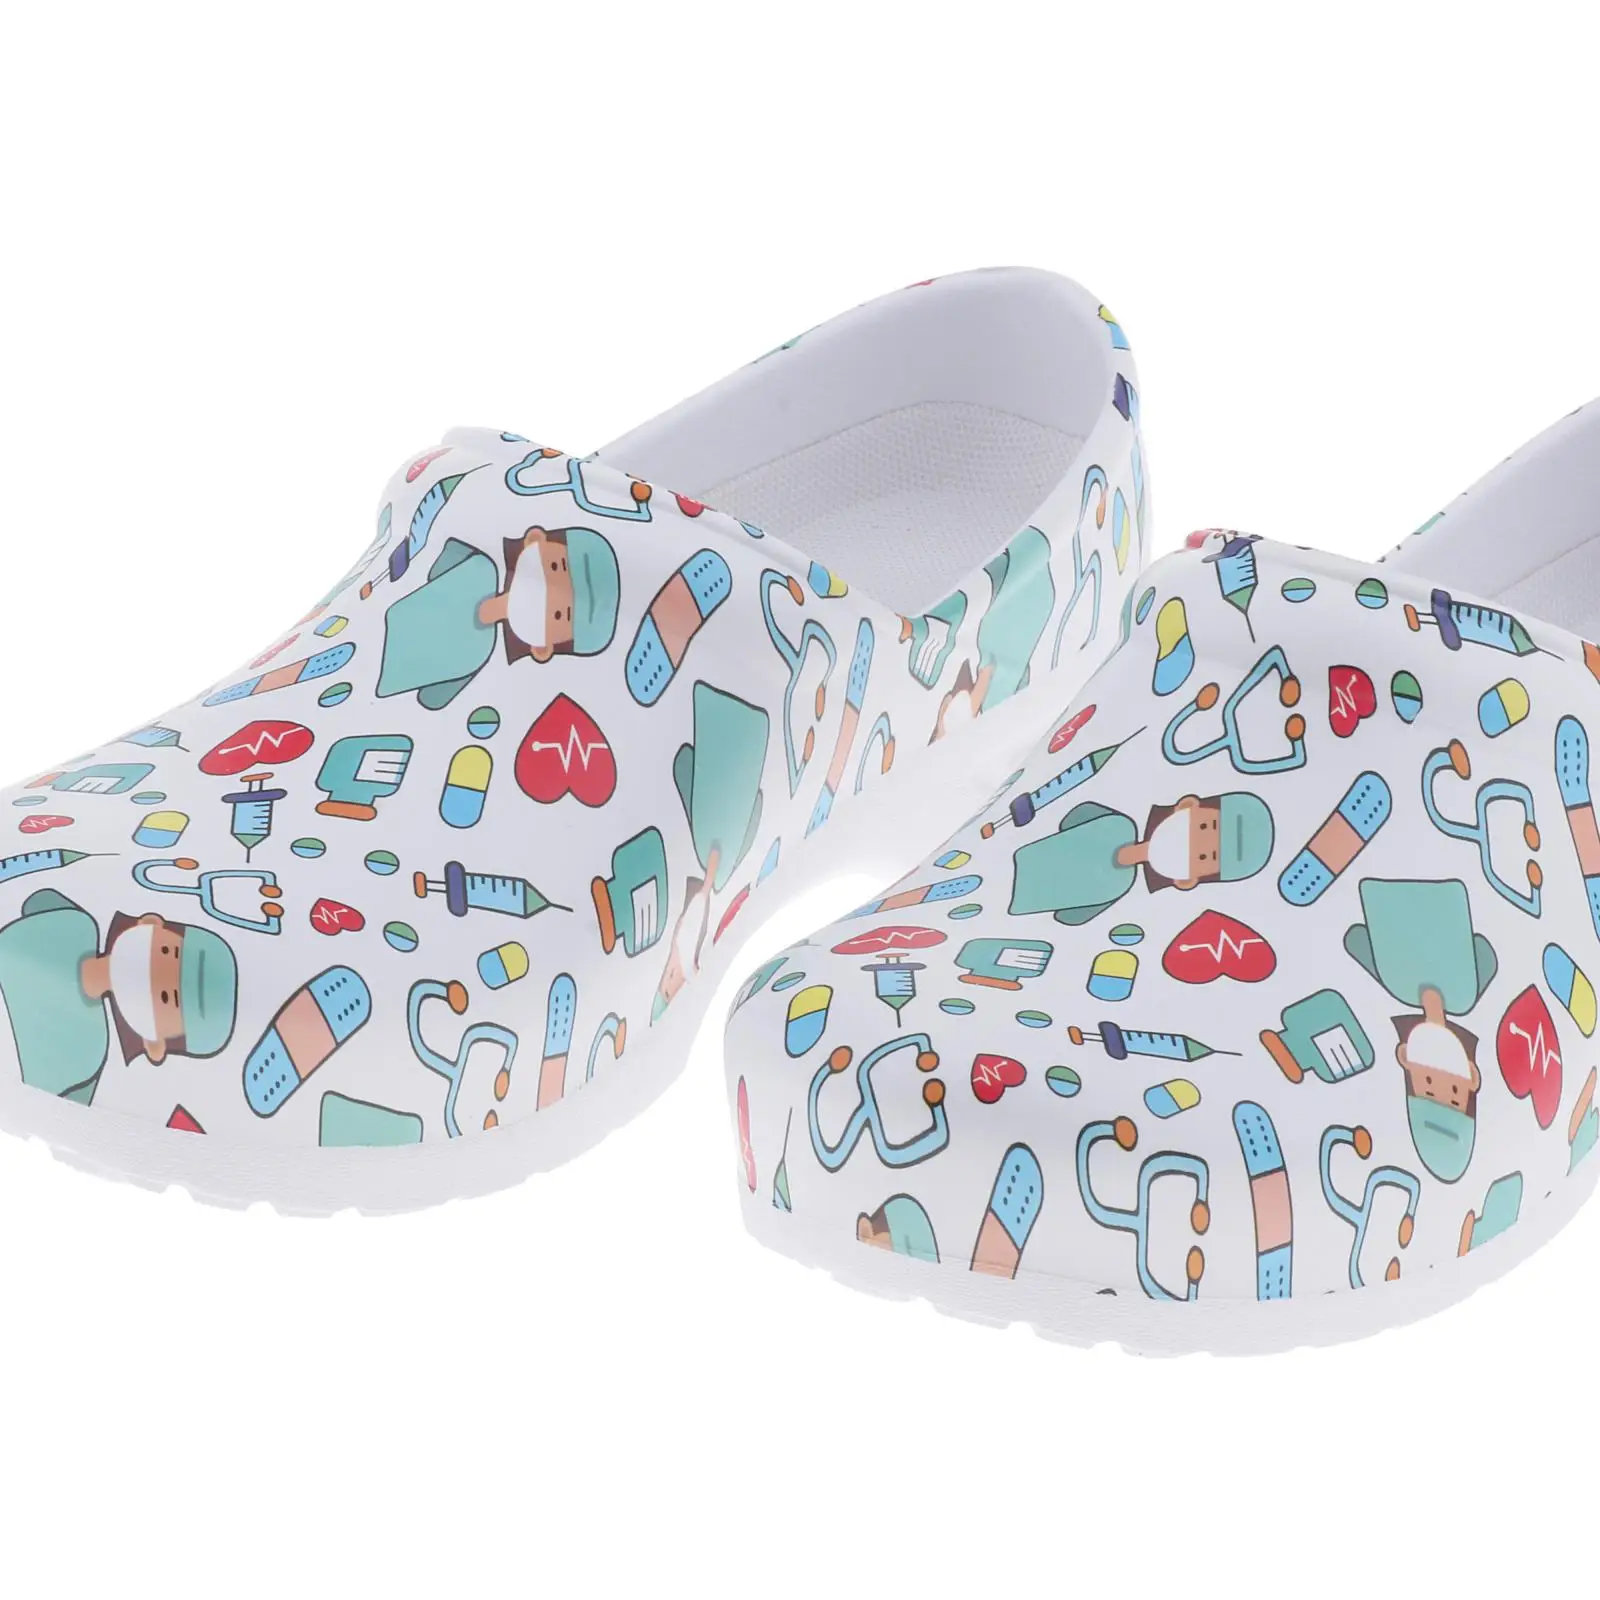 Nursing Shoes Clog for Women Garden Shoes Lightweight Casual Slipers Sandals